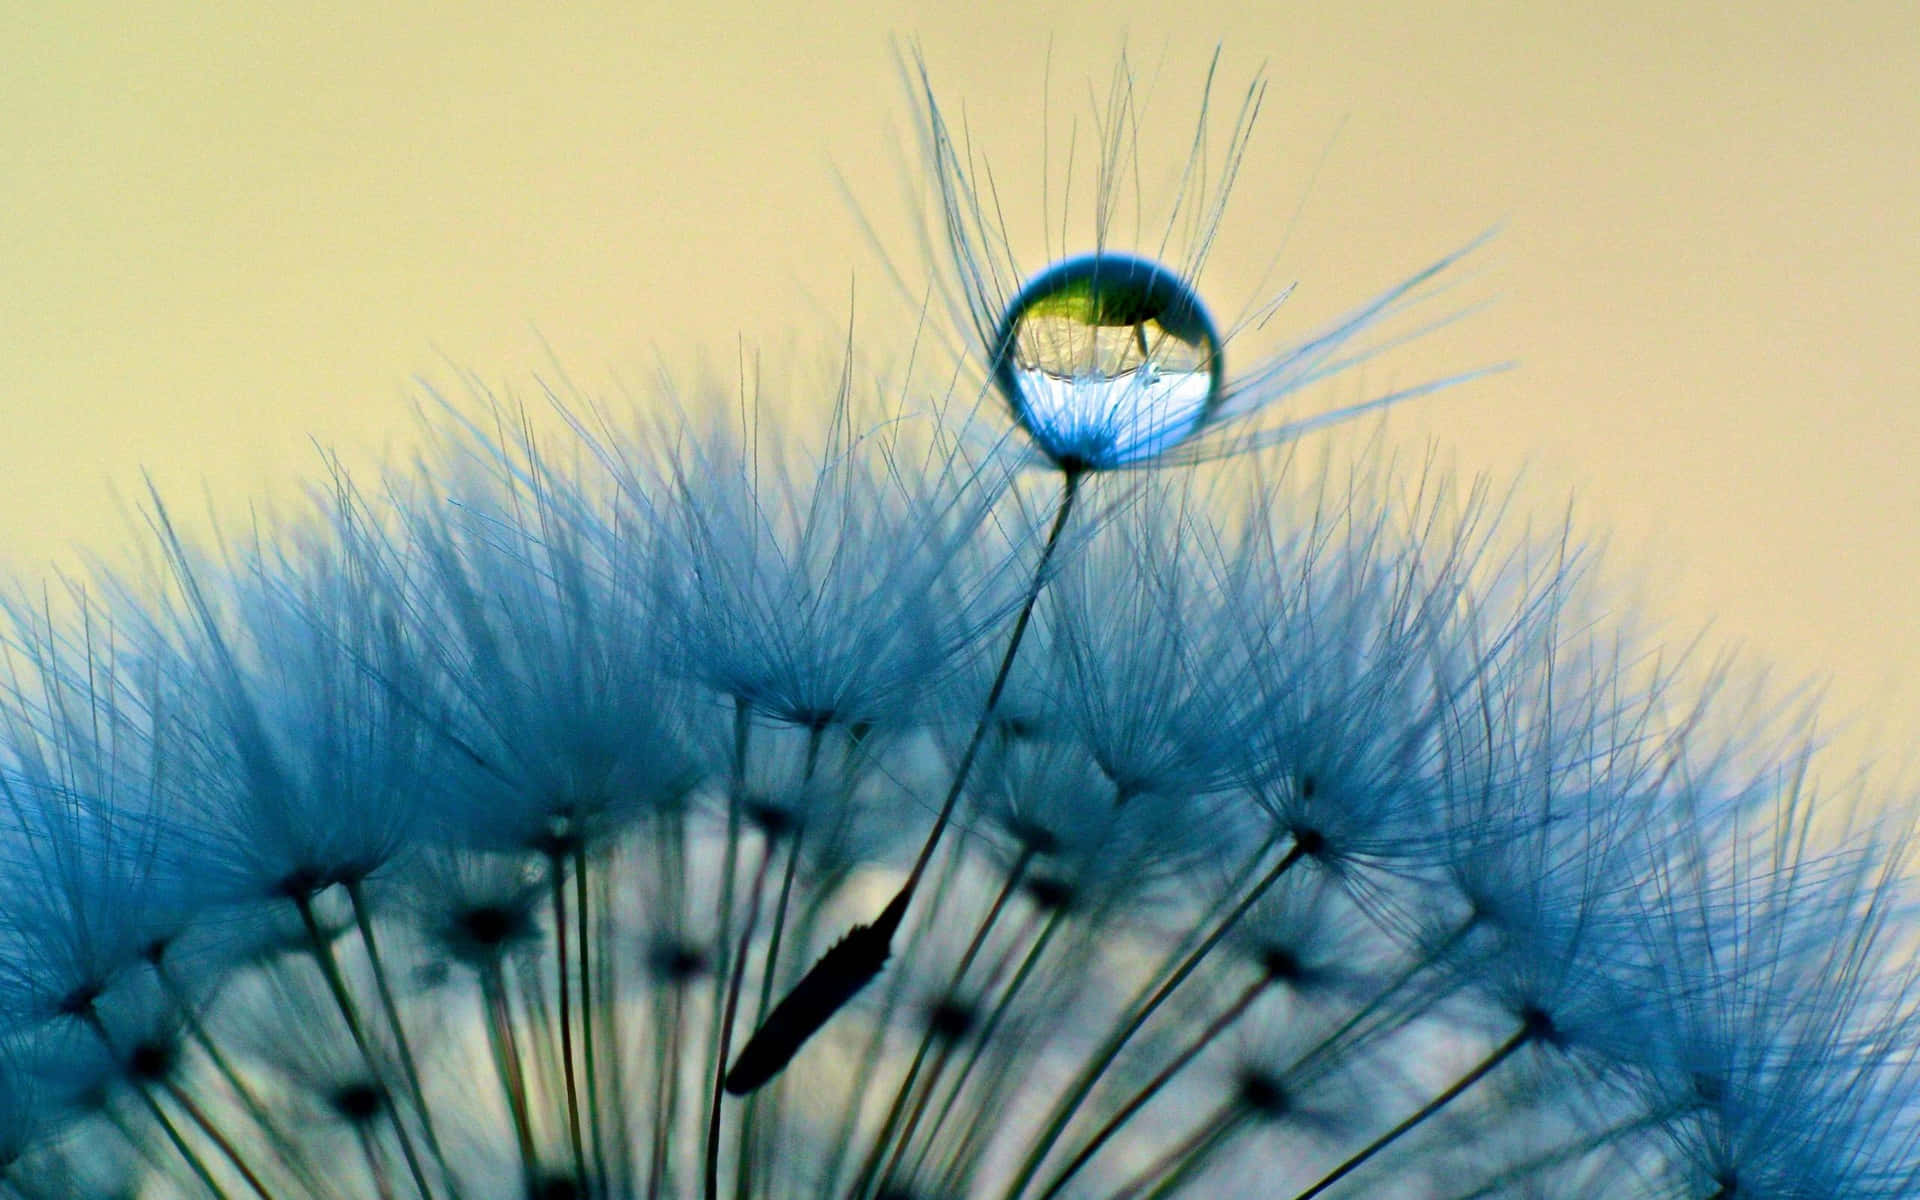 A dandelion seed head up close